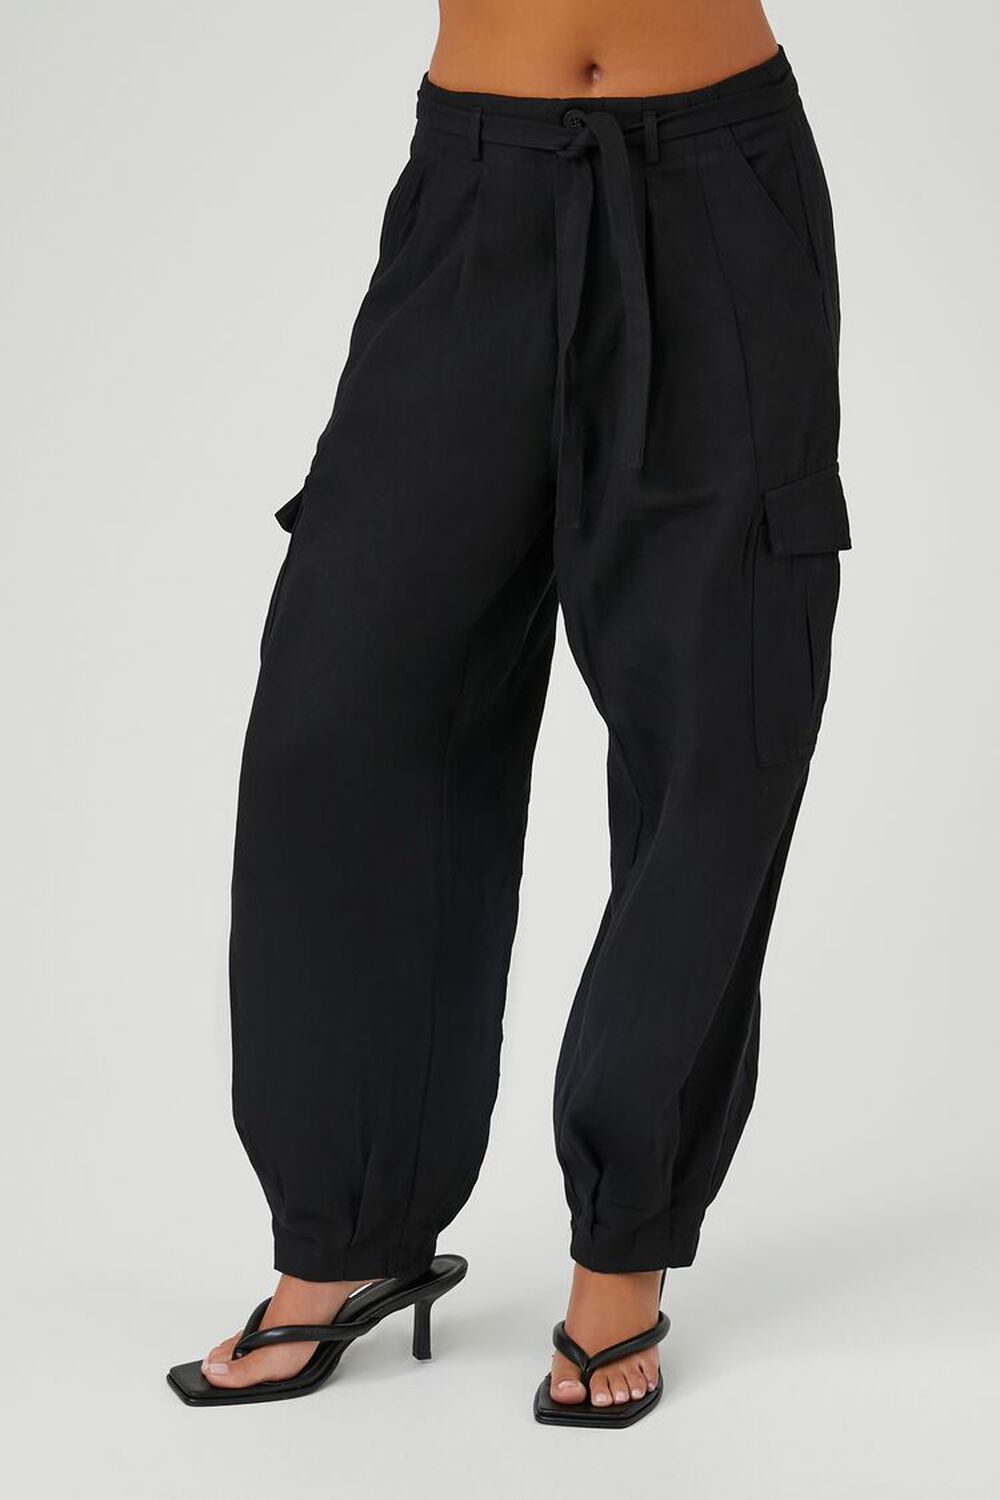 BLACK Tie-Waist Cargo Pants, image 2